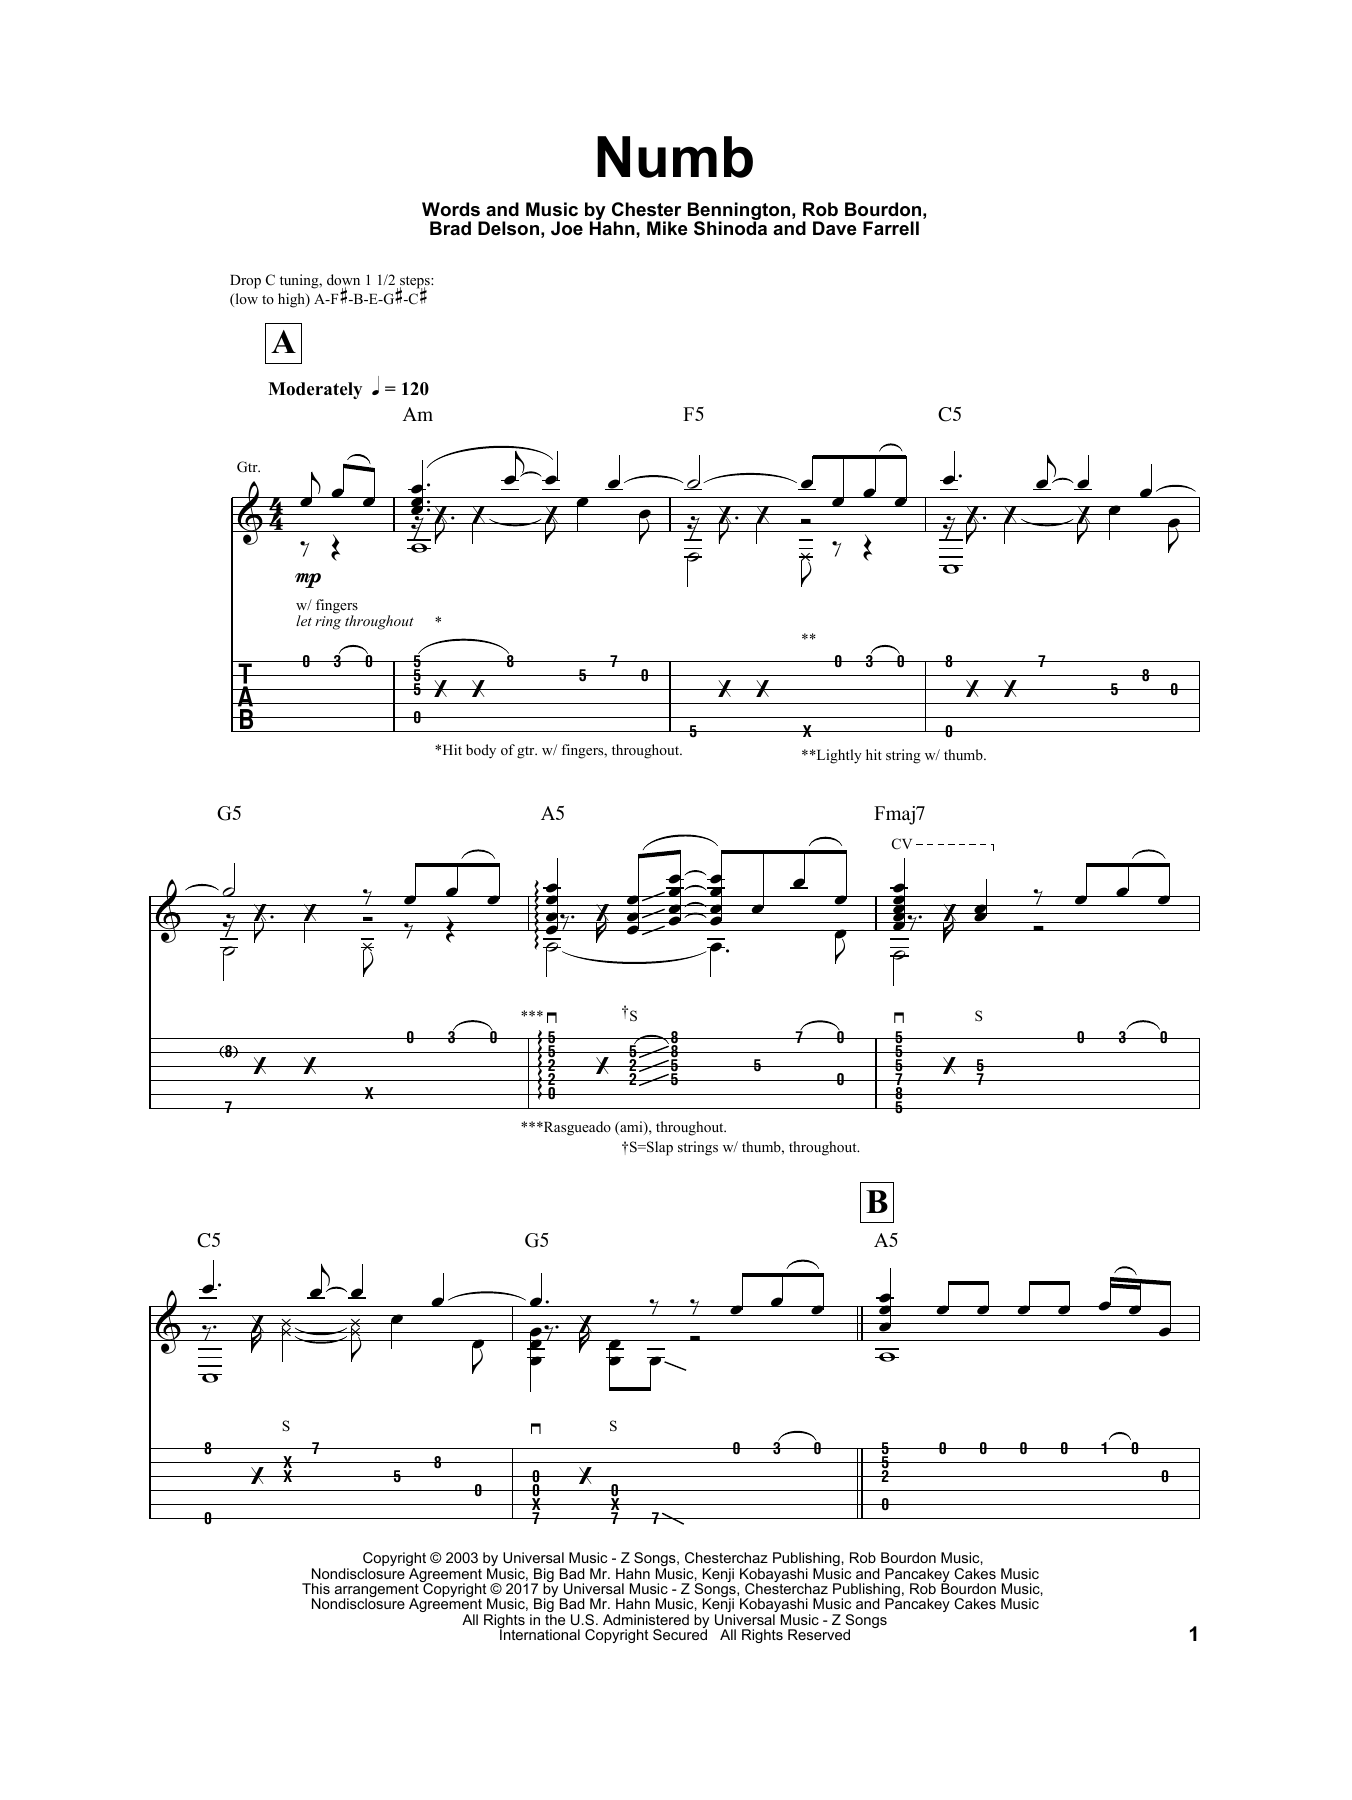 Igor Presnyakov Numb Sheet Music Notes & Chords for Guitar Tab - Download or Print PDF